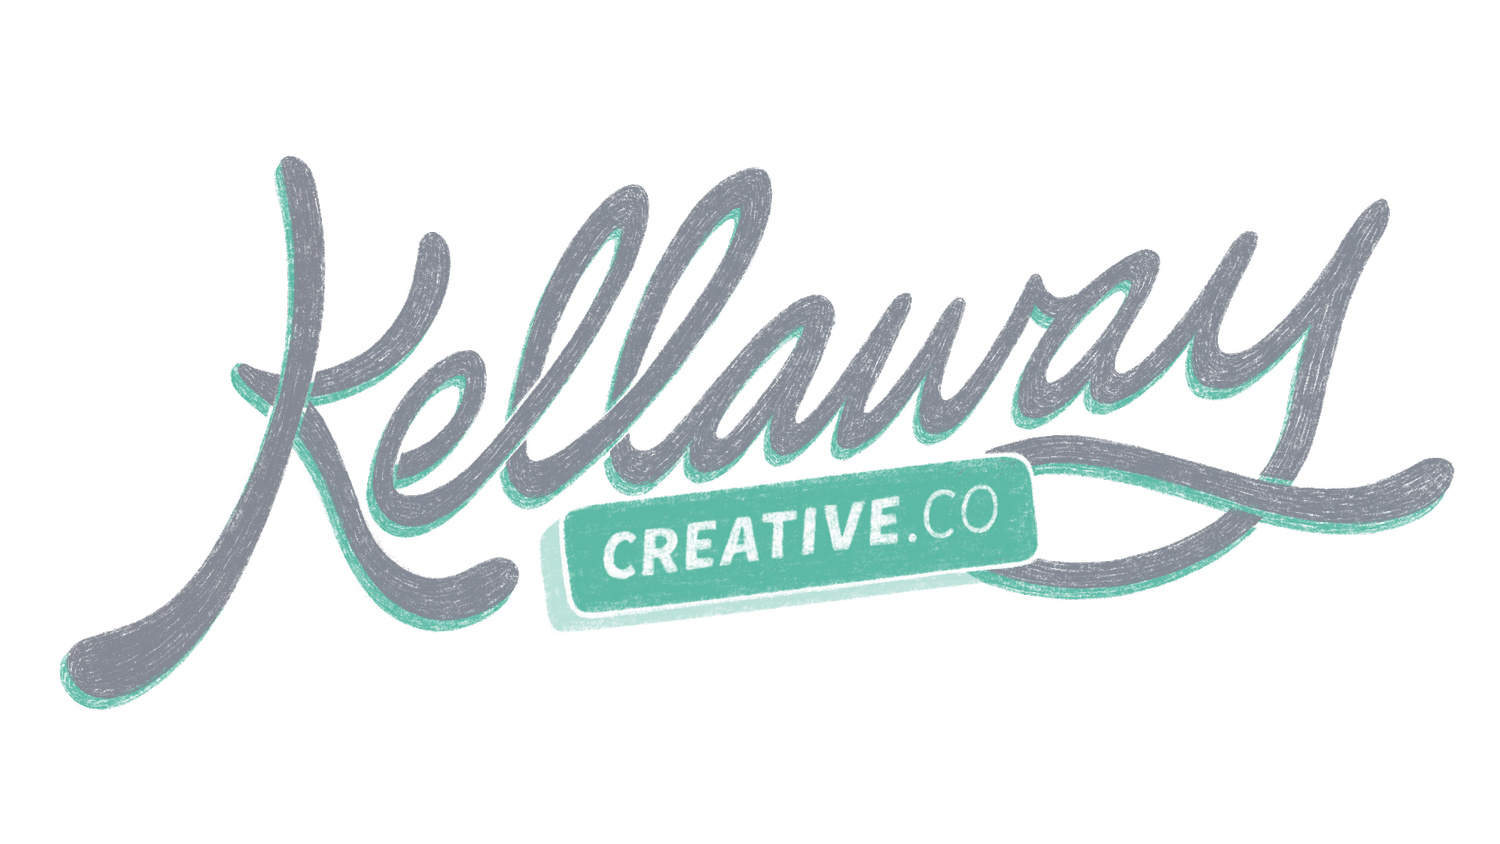 Kellaway Creative Co.